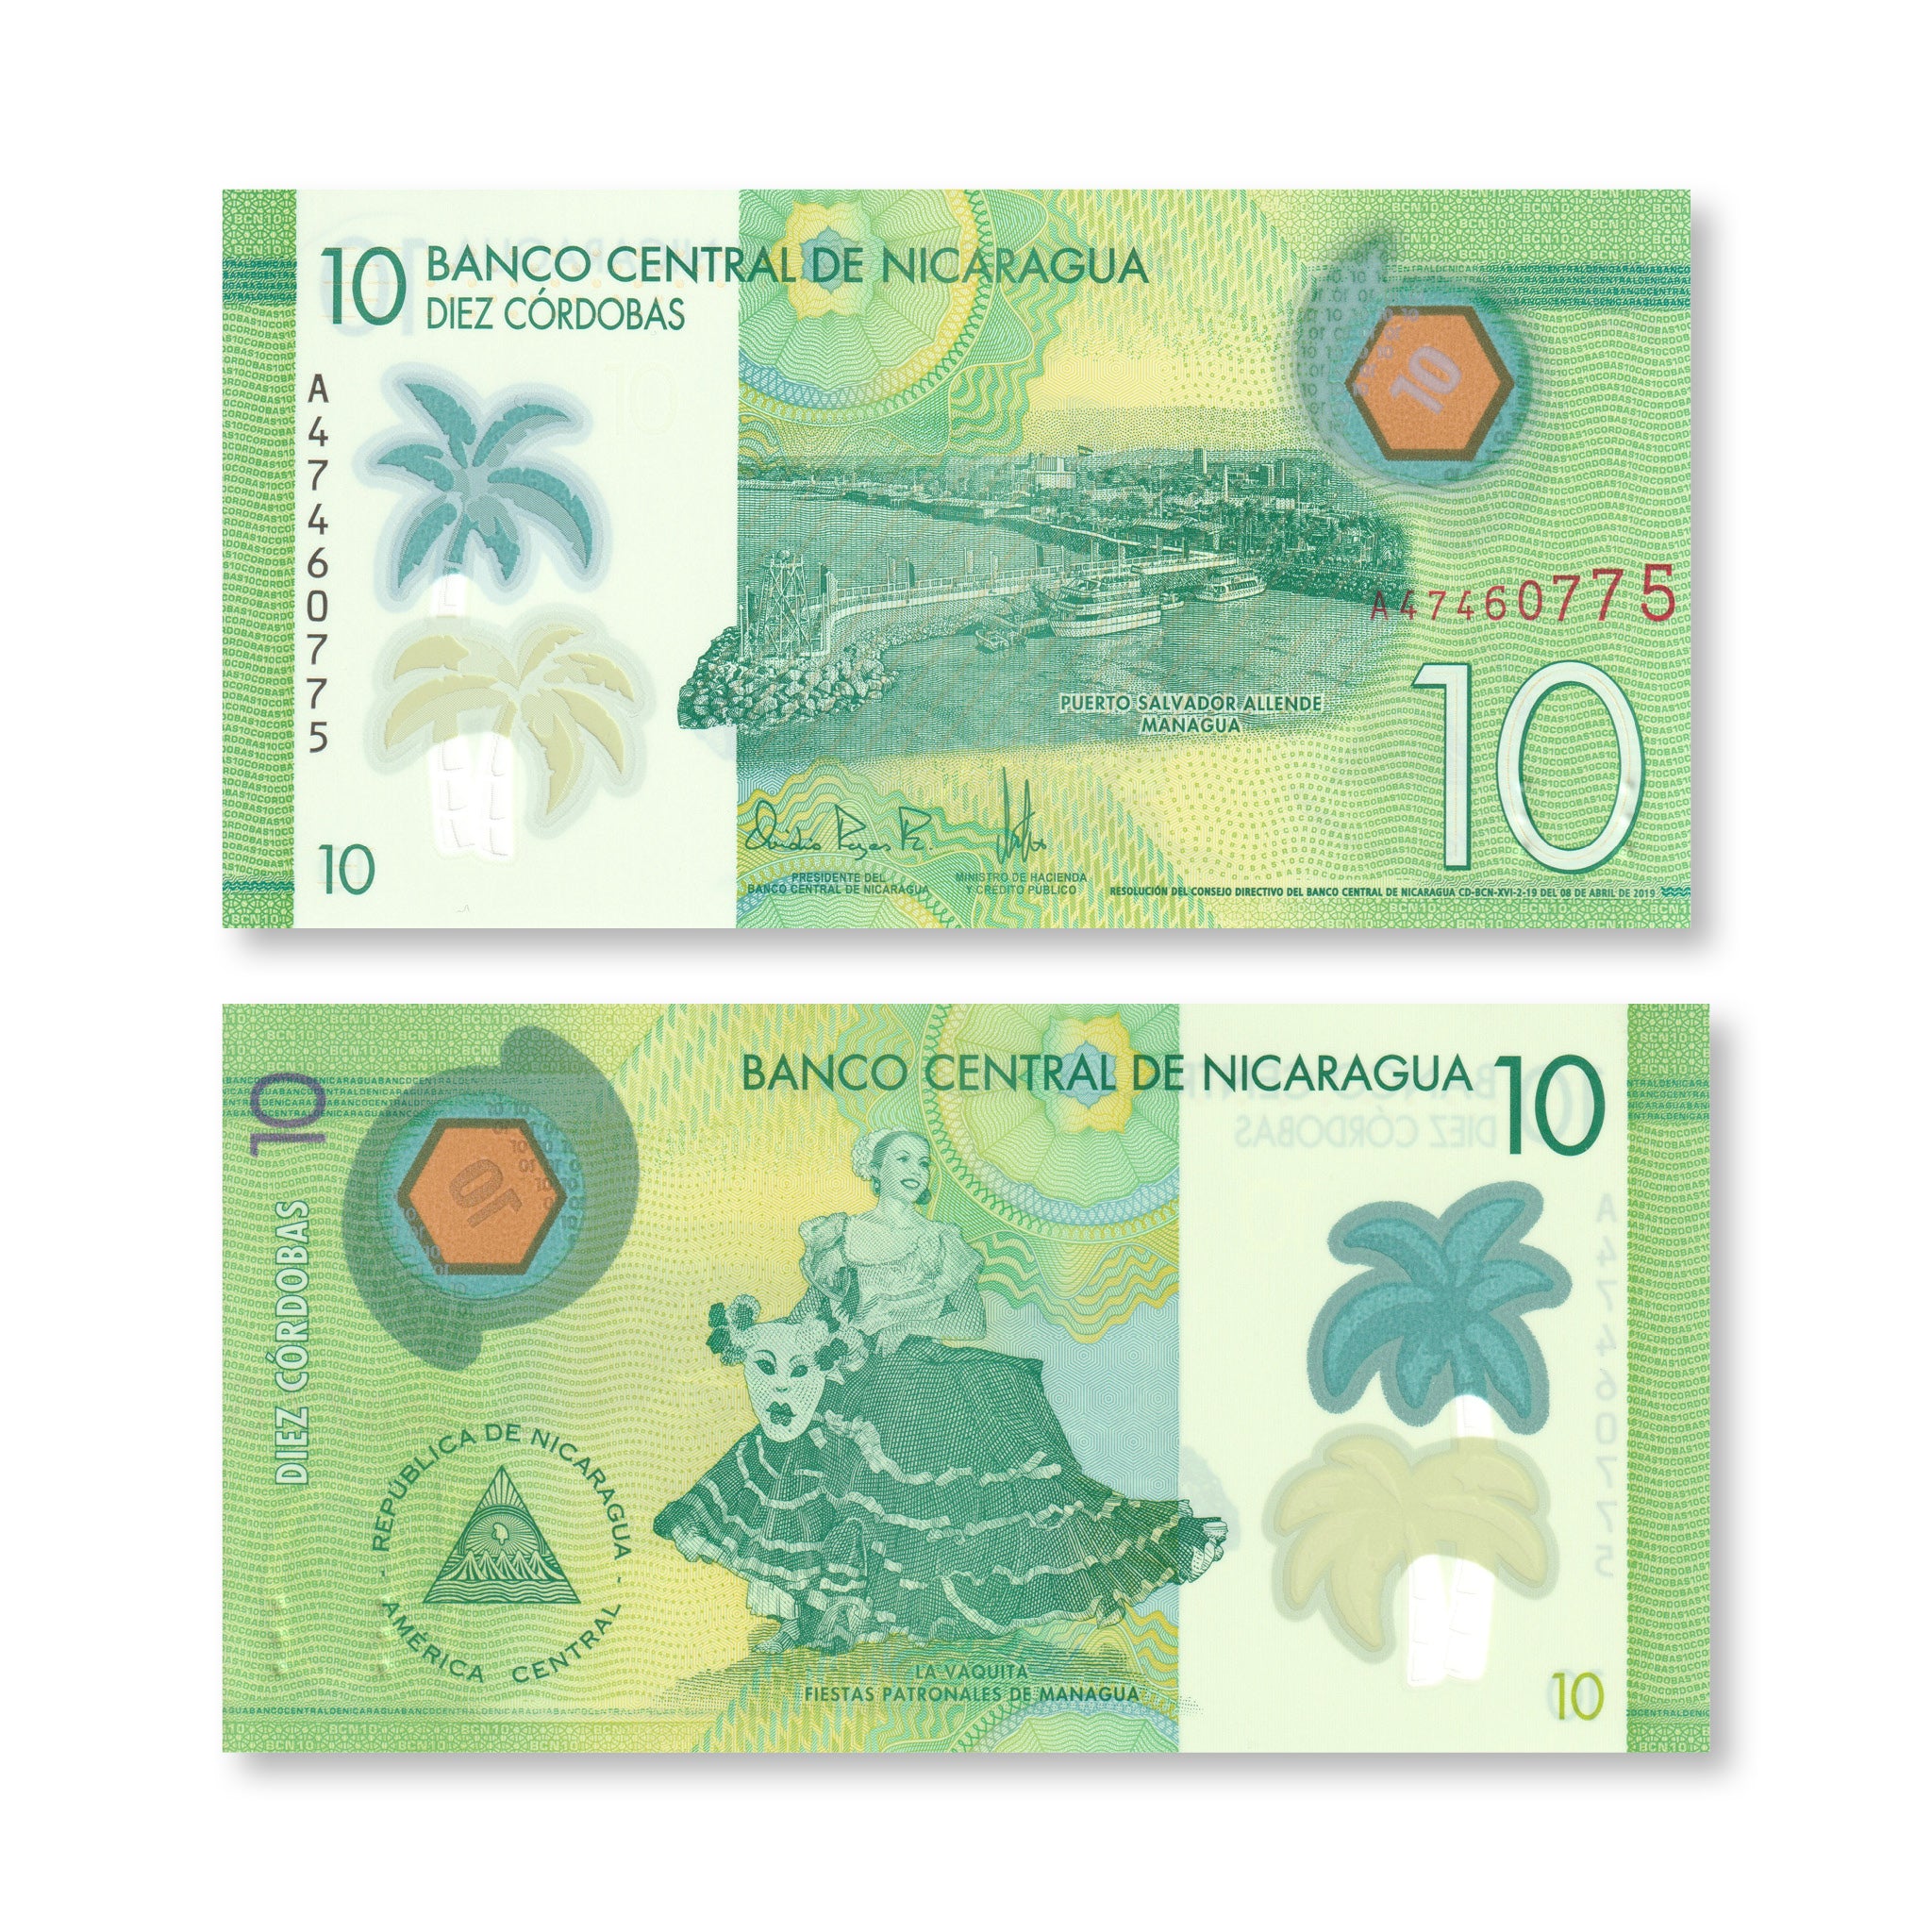 Nicaragua 10 Córdobas, 2019, B506b, P209, UNC - Robert's World Money - World Banknotes